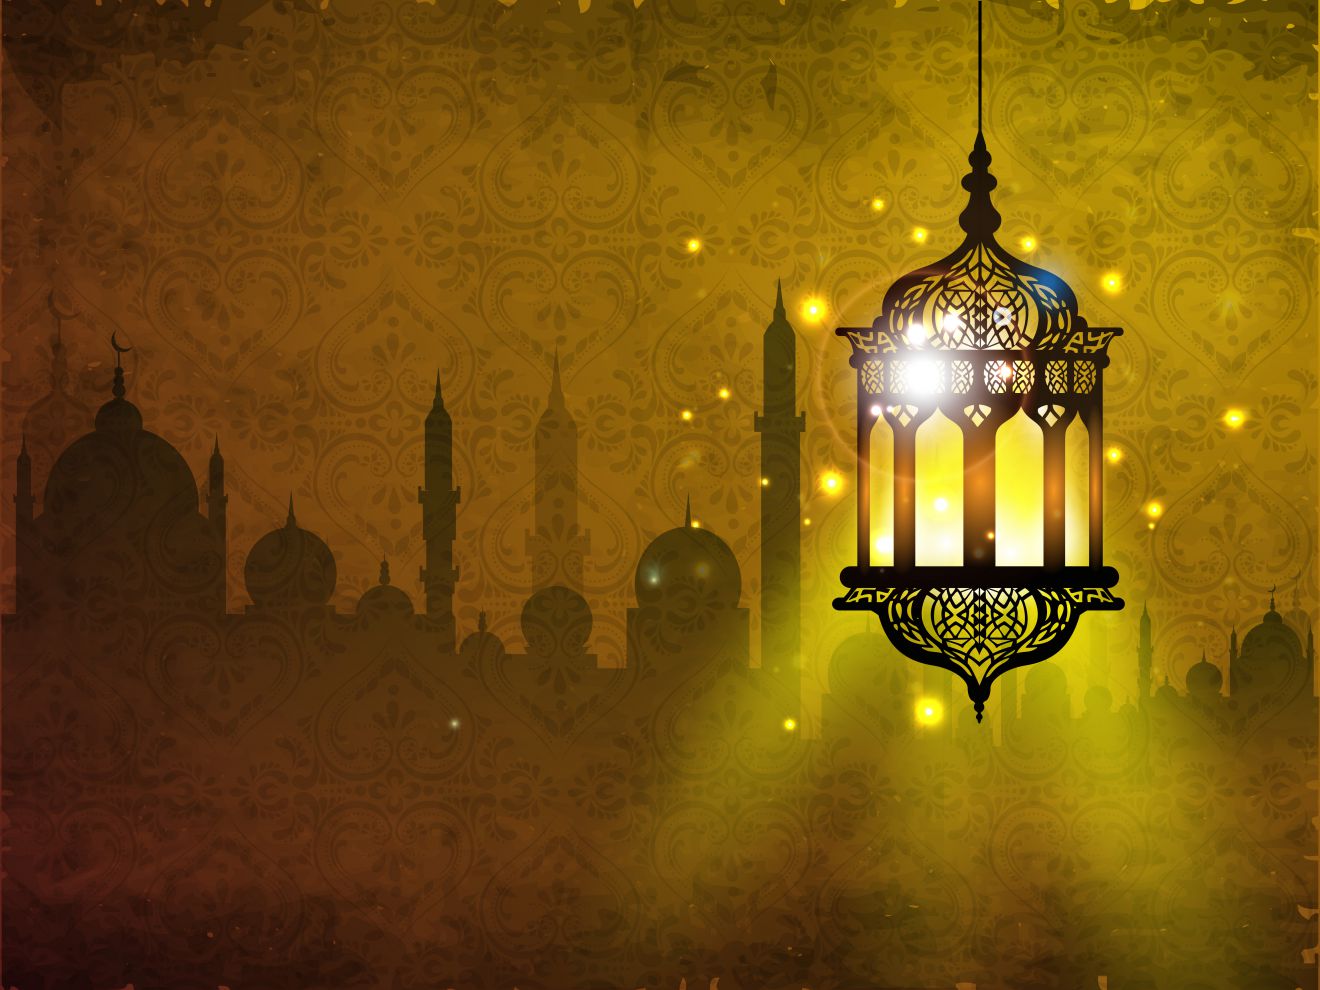 ramadan 1